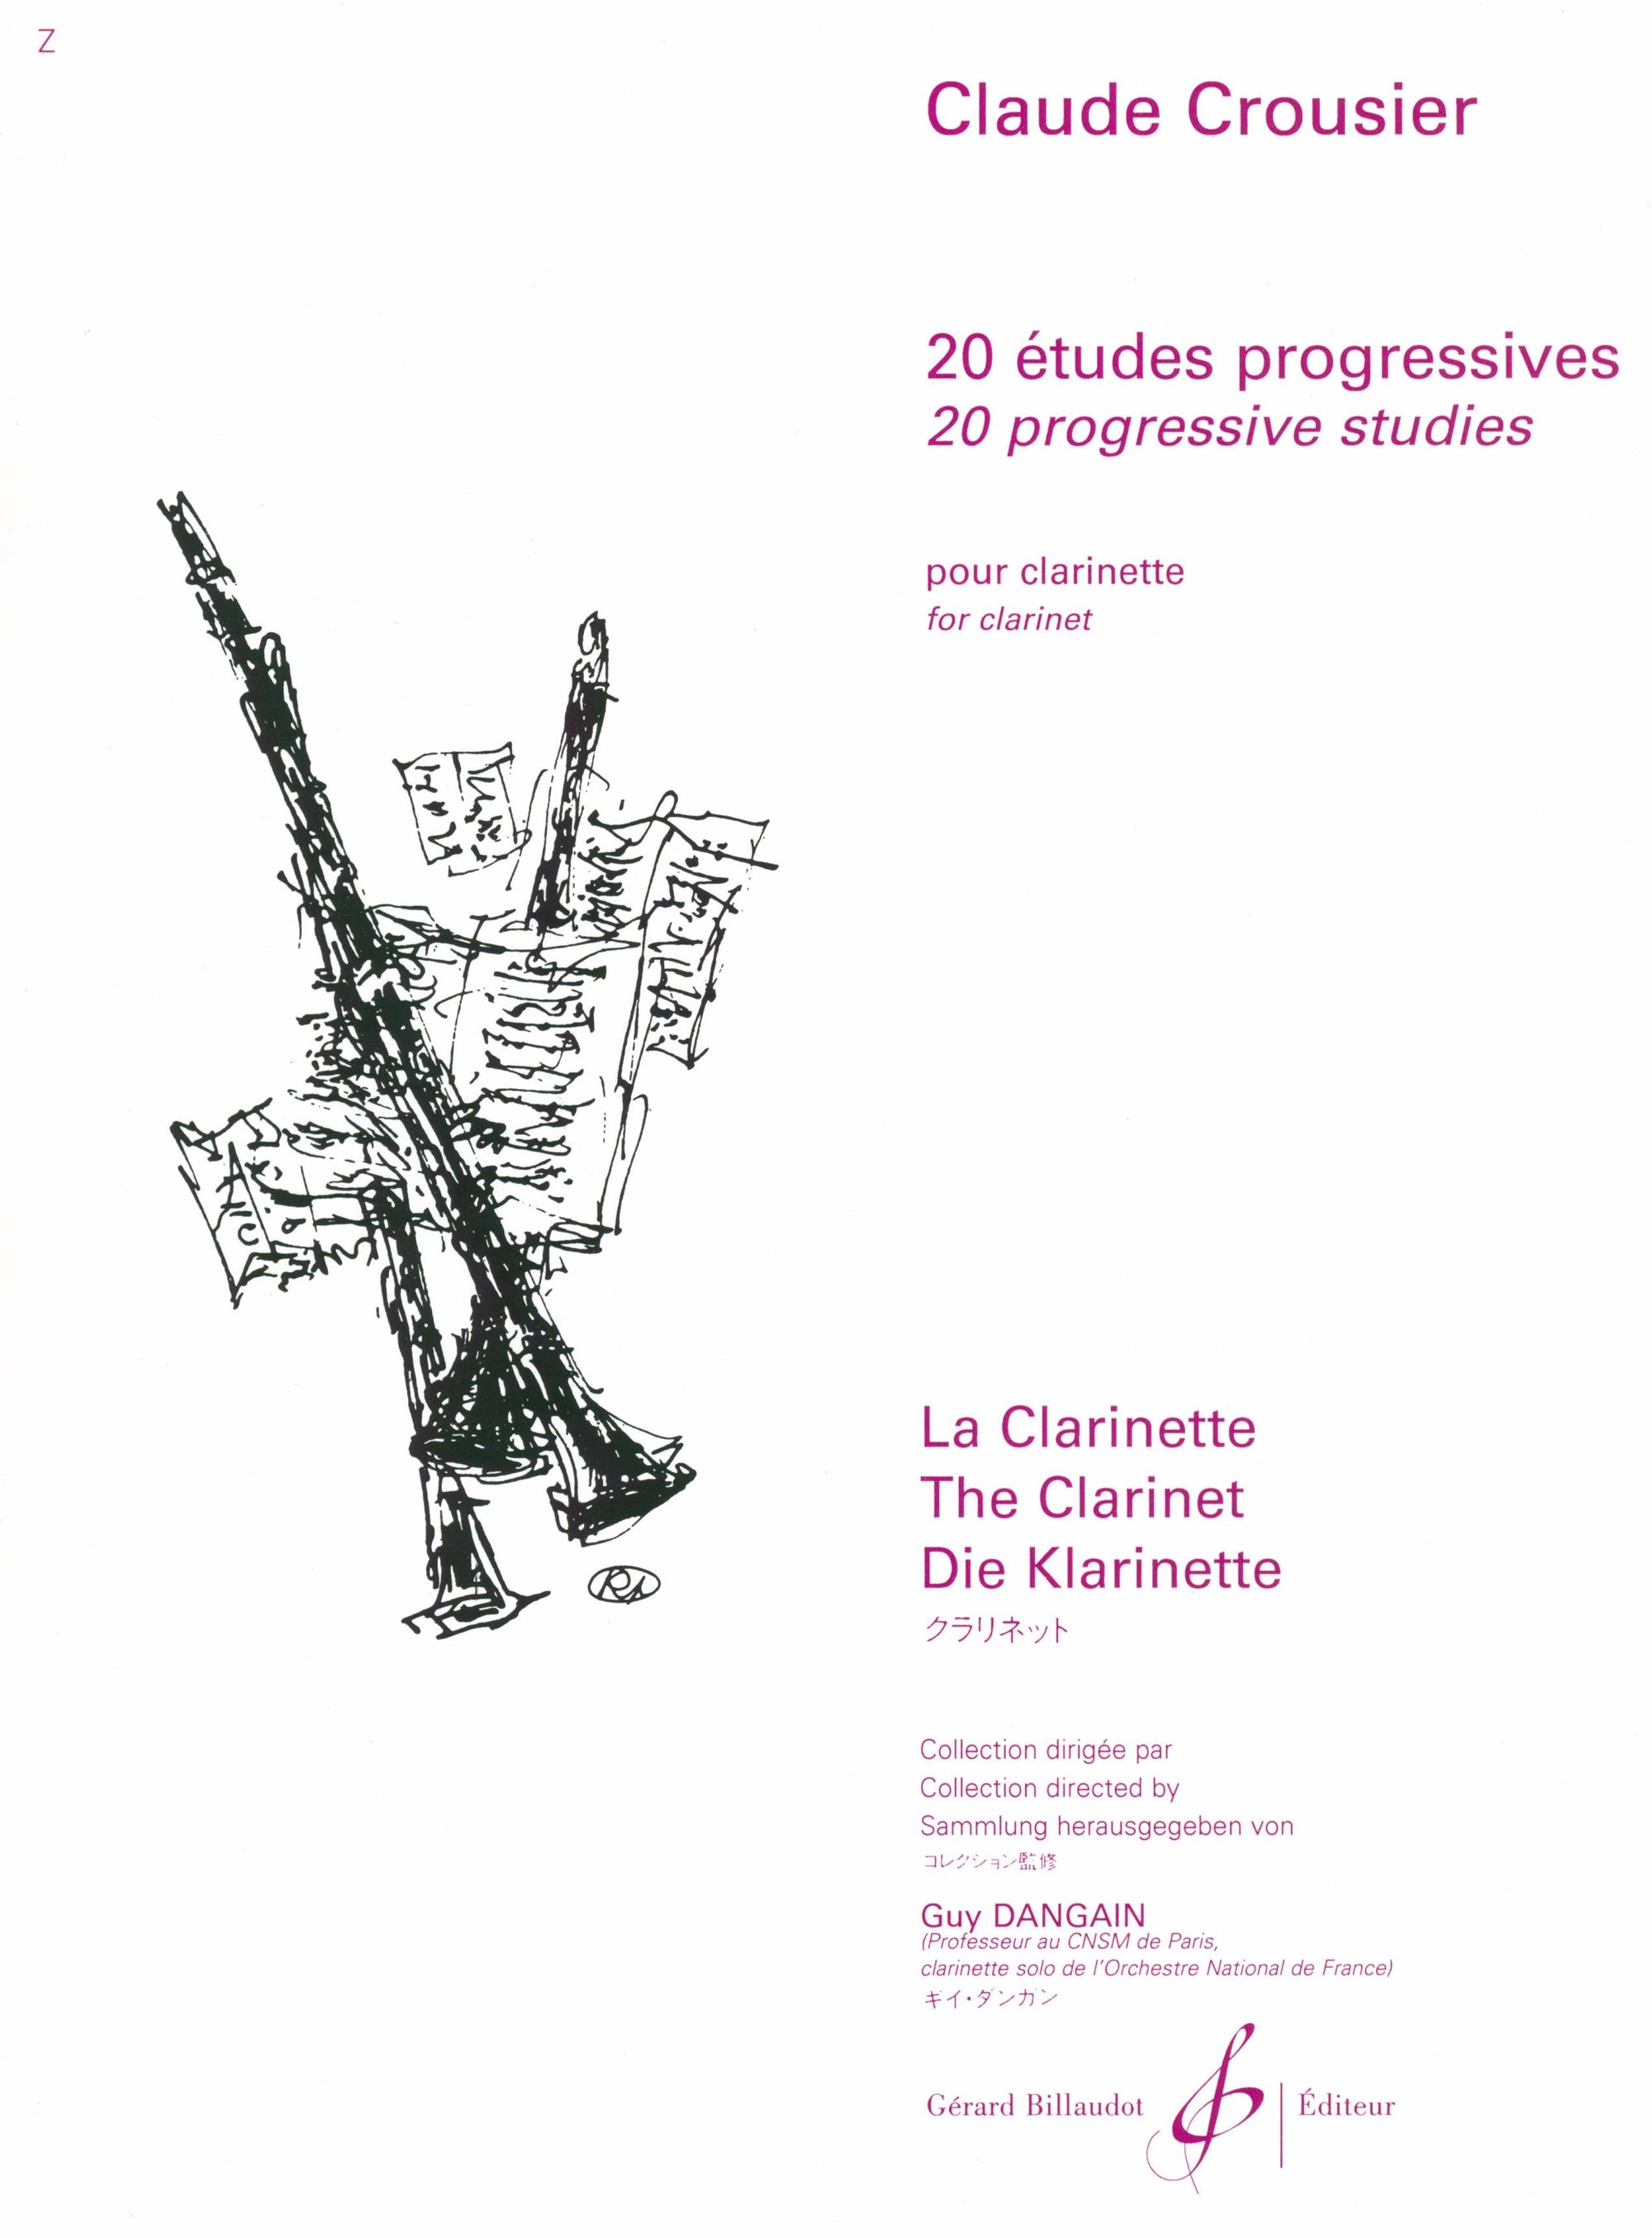 Crousier: 20 Progressive Studies